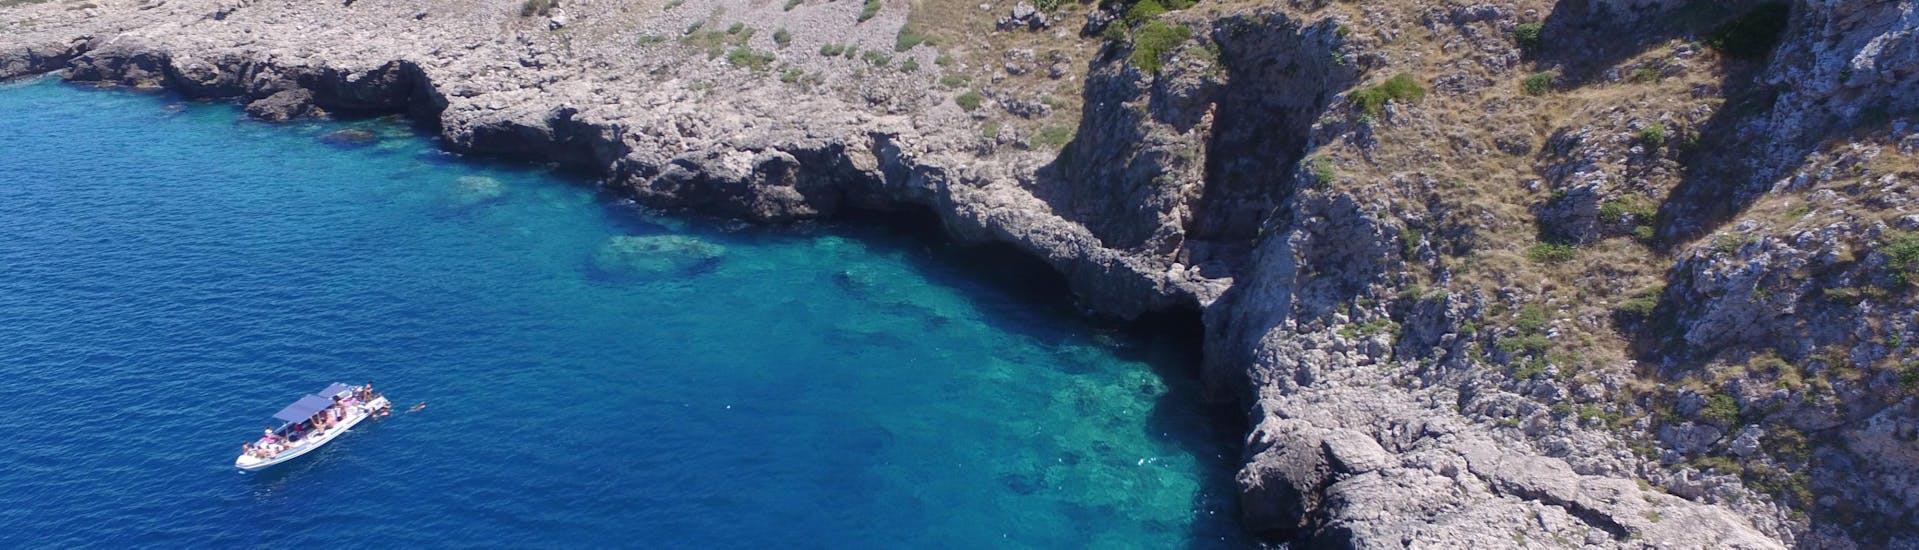 Balade en bateau semi-rigide à Porto Selvaggio et ses grottes.